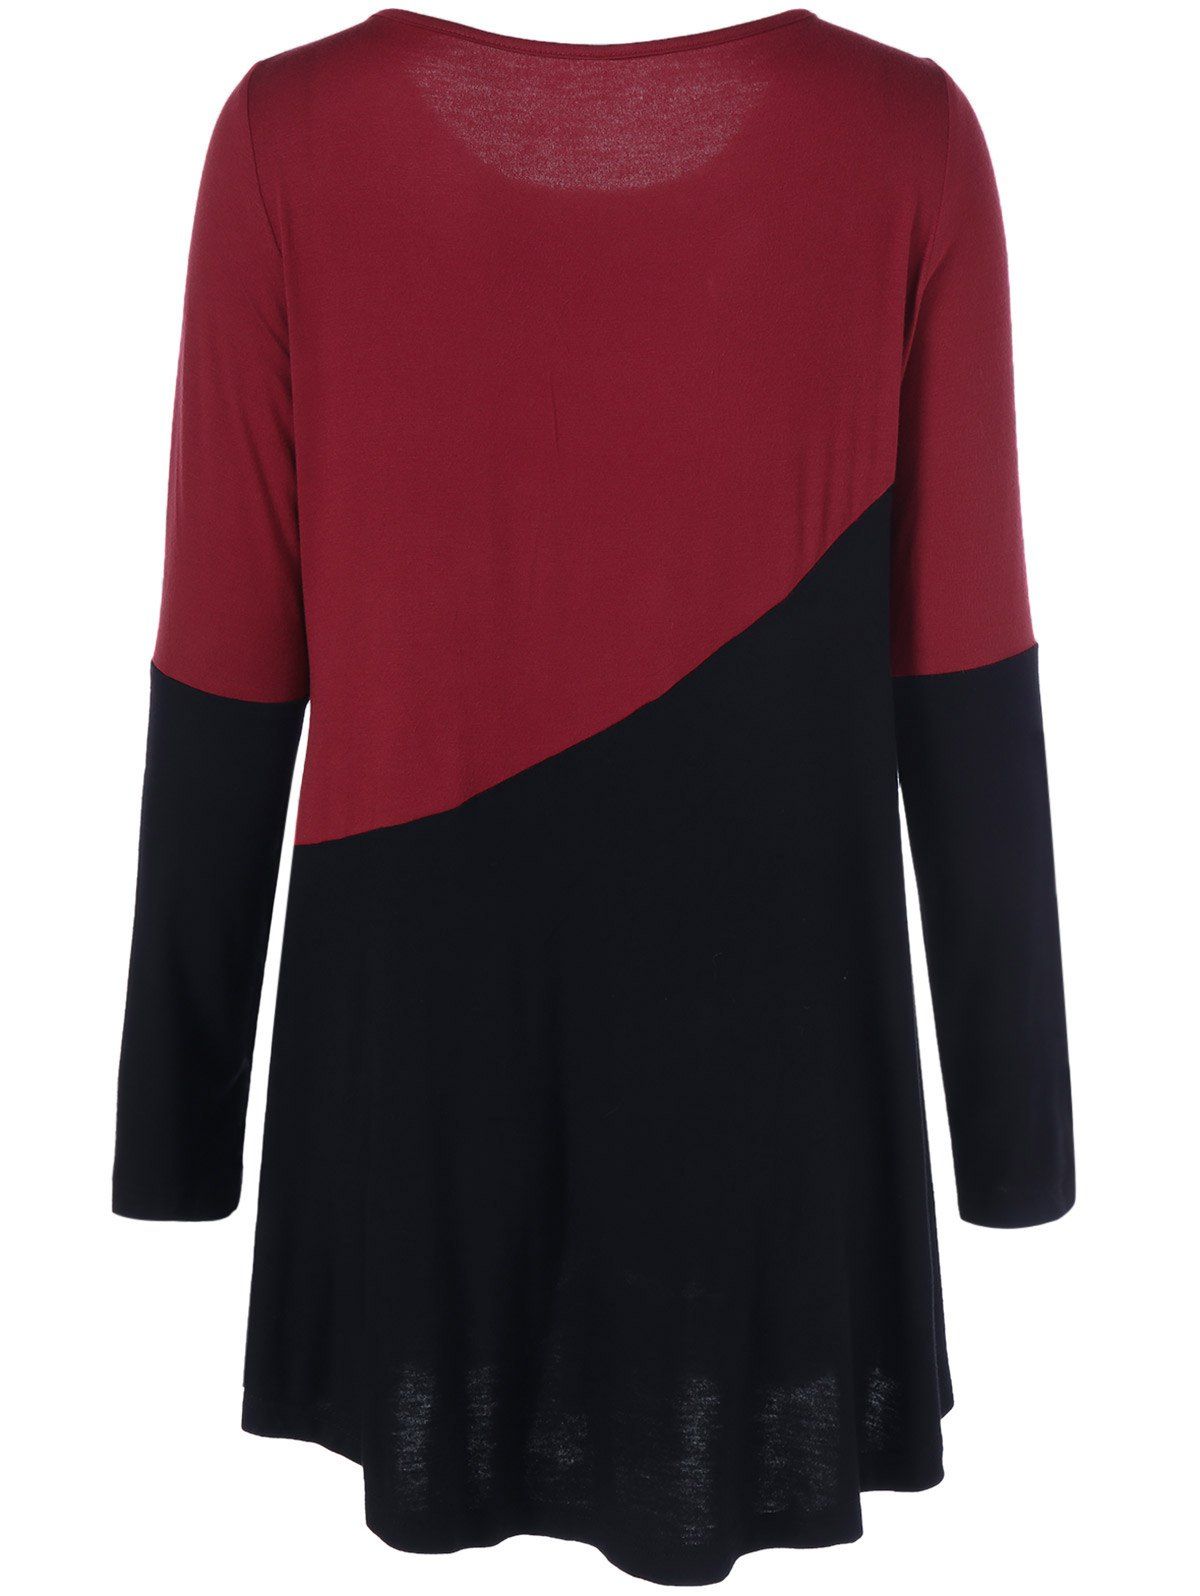 2018 Color Block Longline T-Shirt RED/BLACK M In Long Sleeves Online ...